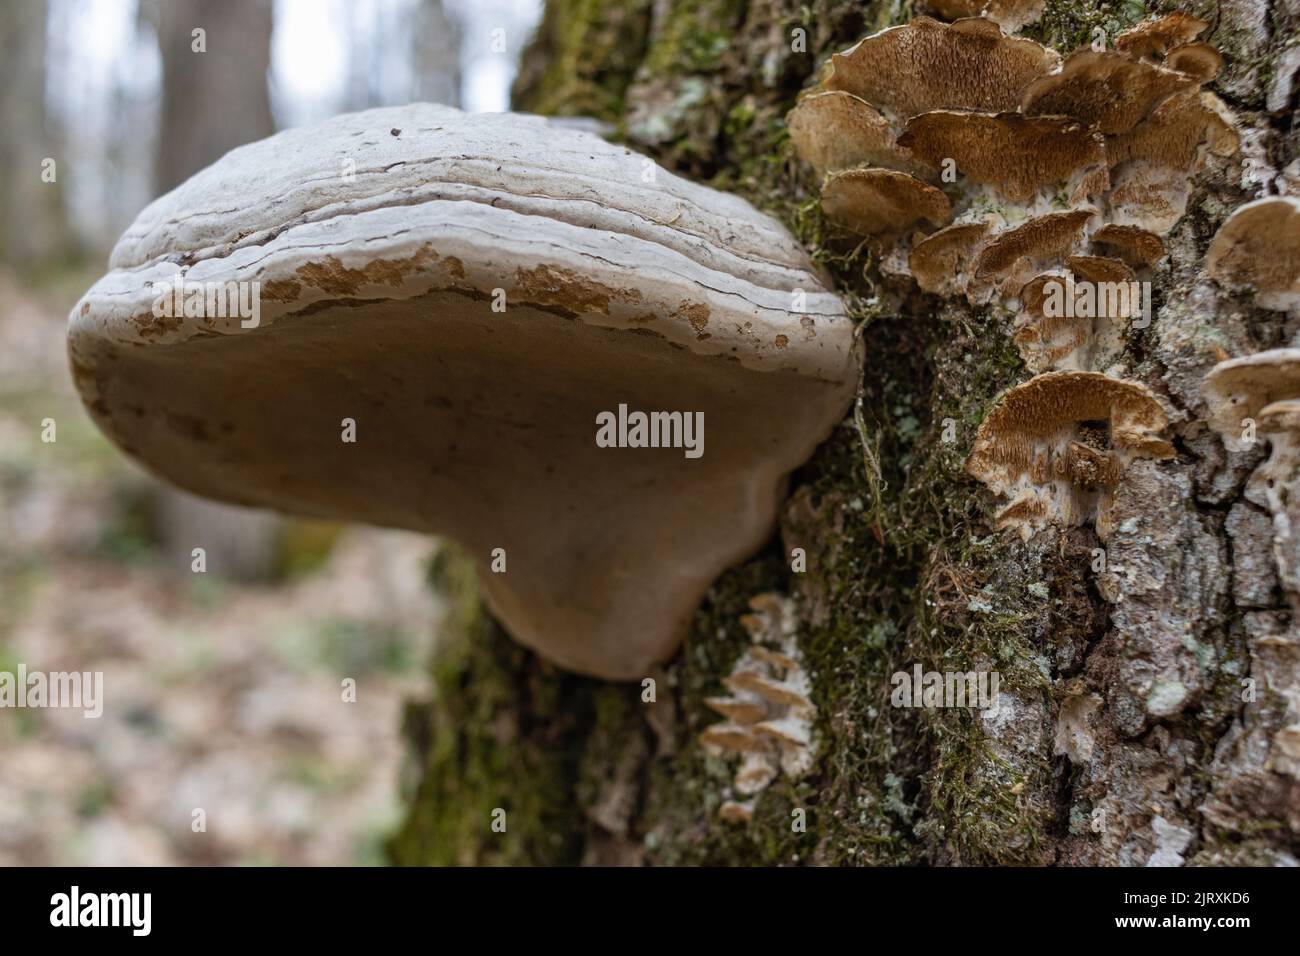 Large parasitic mushroom that grows on tree trunks. Tinder fungus, hoof fungus, tinder conk, tinder polypore or ice man fungus Stock Photo